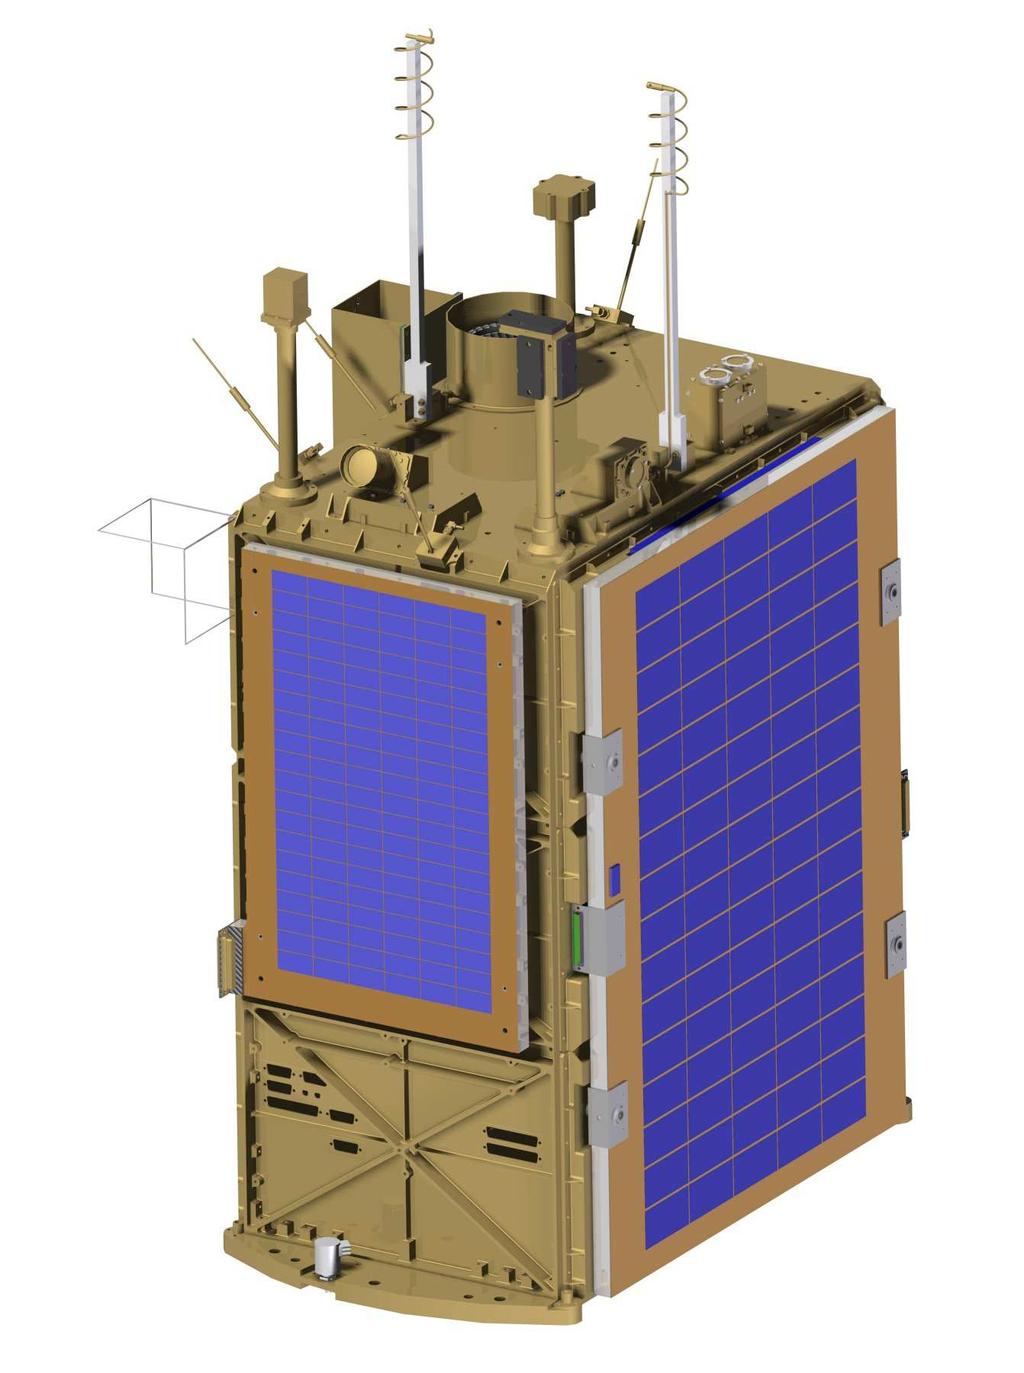 Sumbandila Satellite Project 80 kg Microsatellite for DST» 500 km 10 am/pm sun-synchronous orbit» 6.